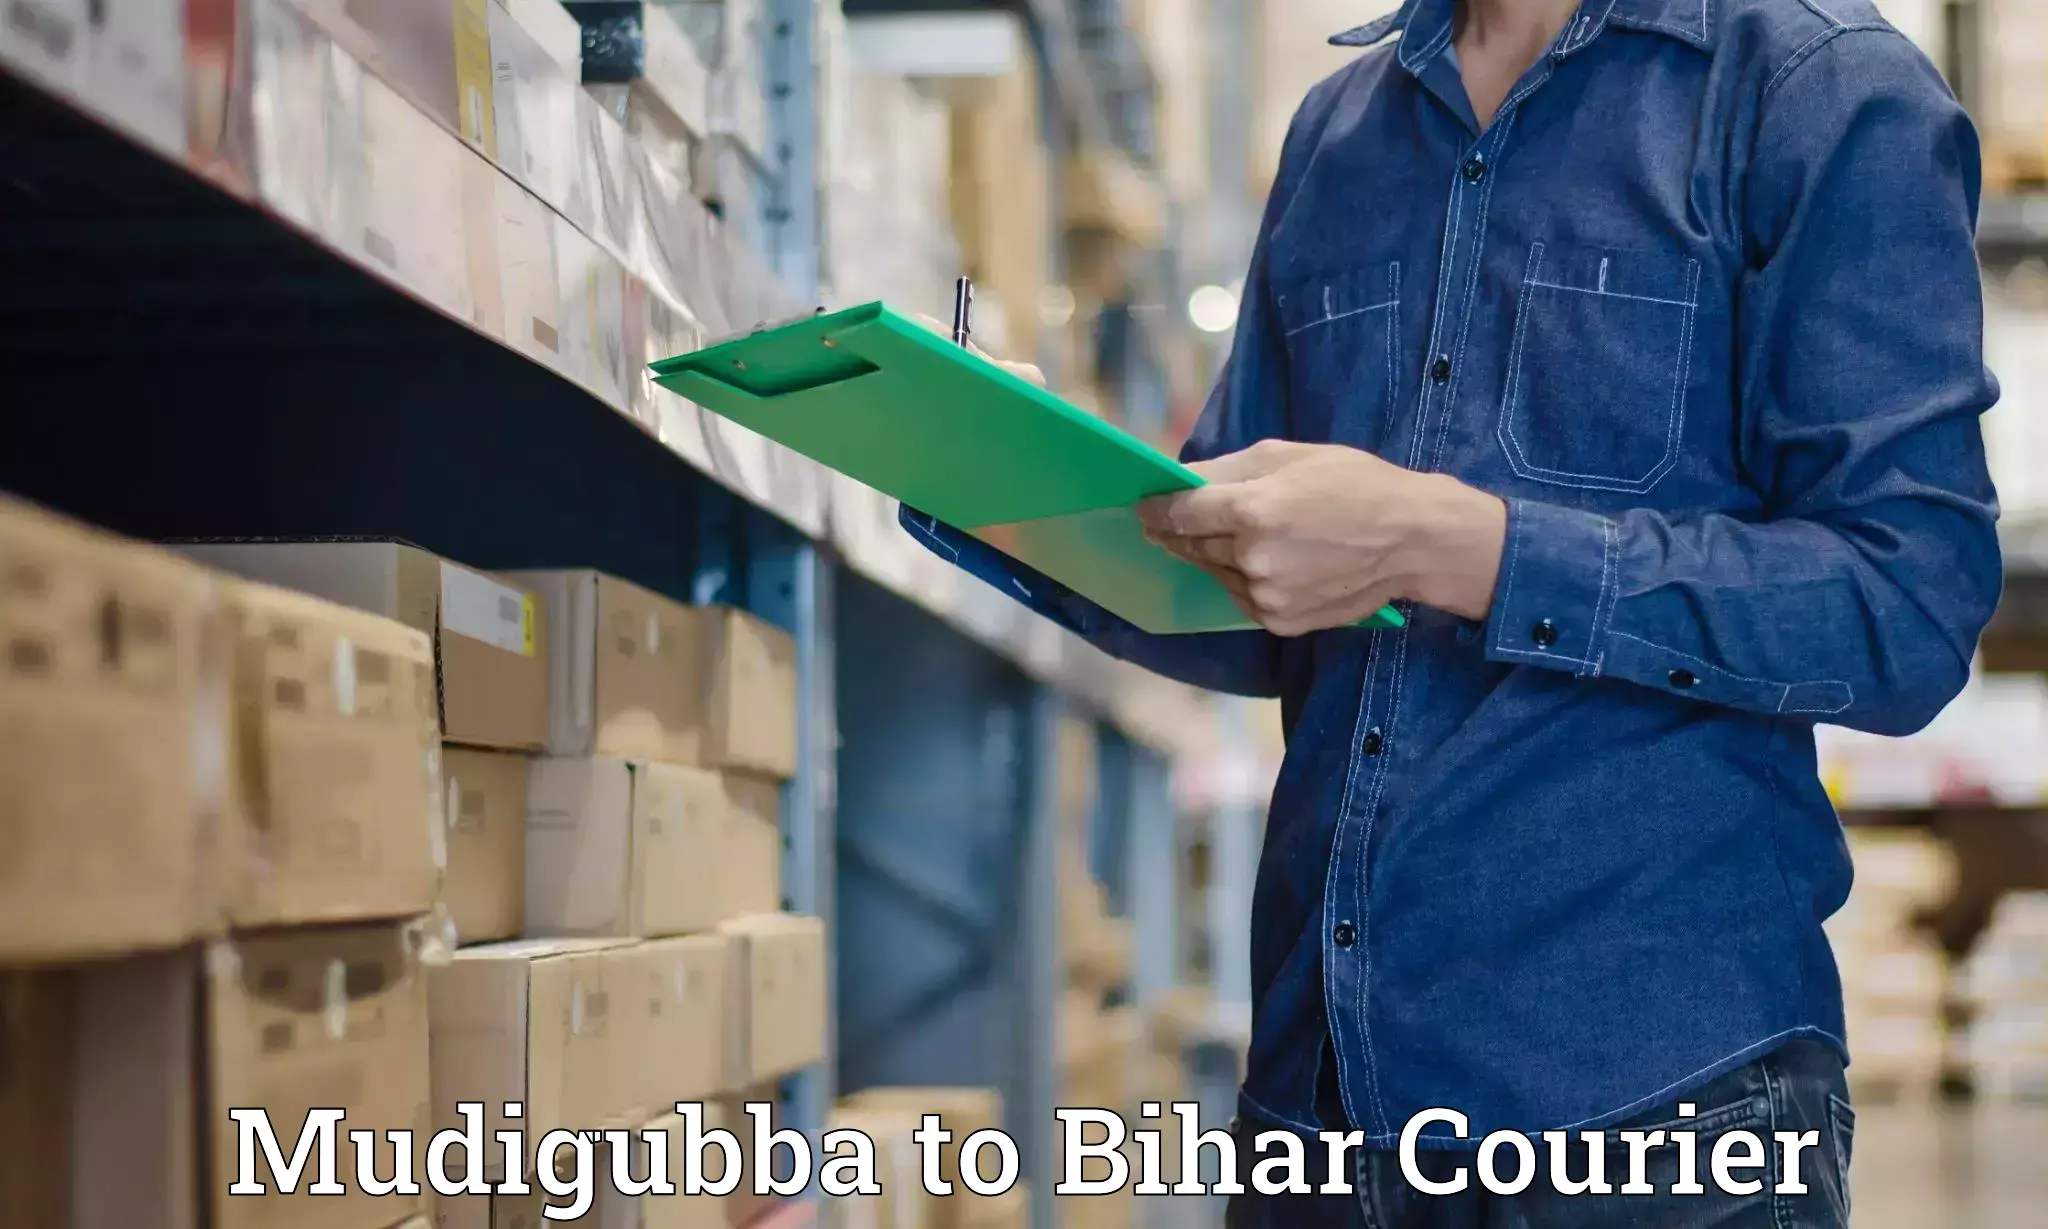 Courier service partnerships Mudigubba to Sharfuddinpur